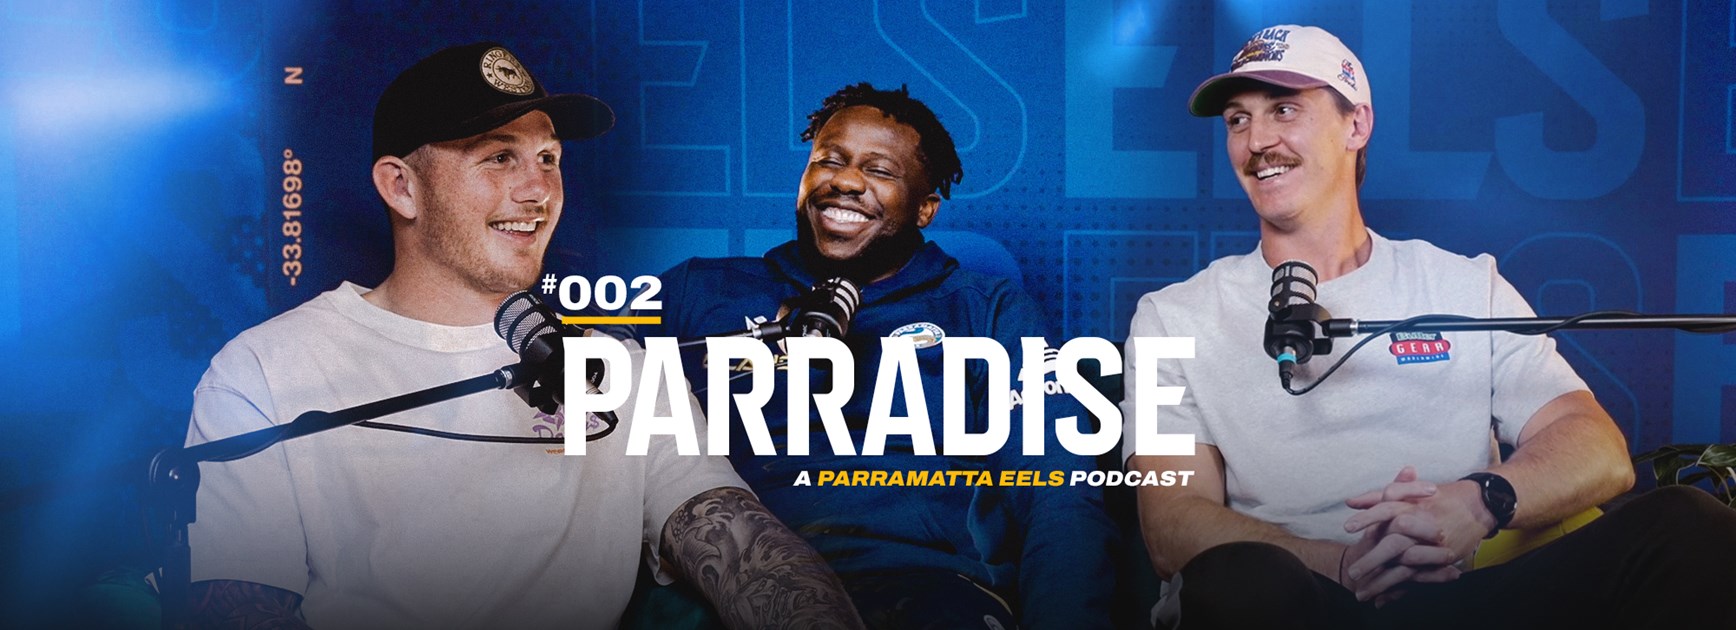 J'maine Hopgood joins PARRAdise Podcast!